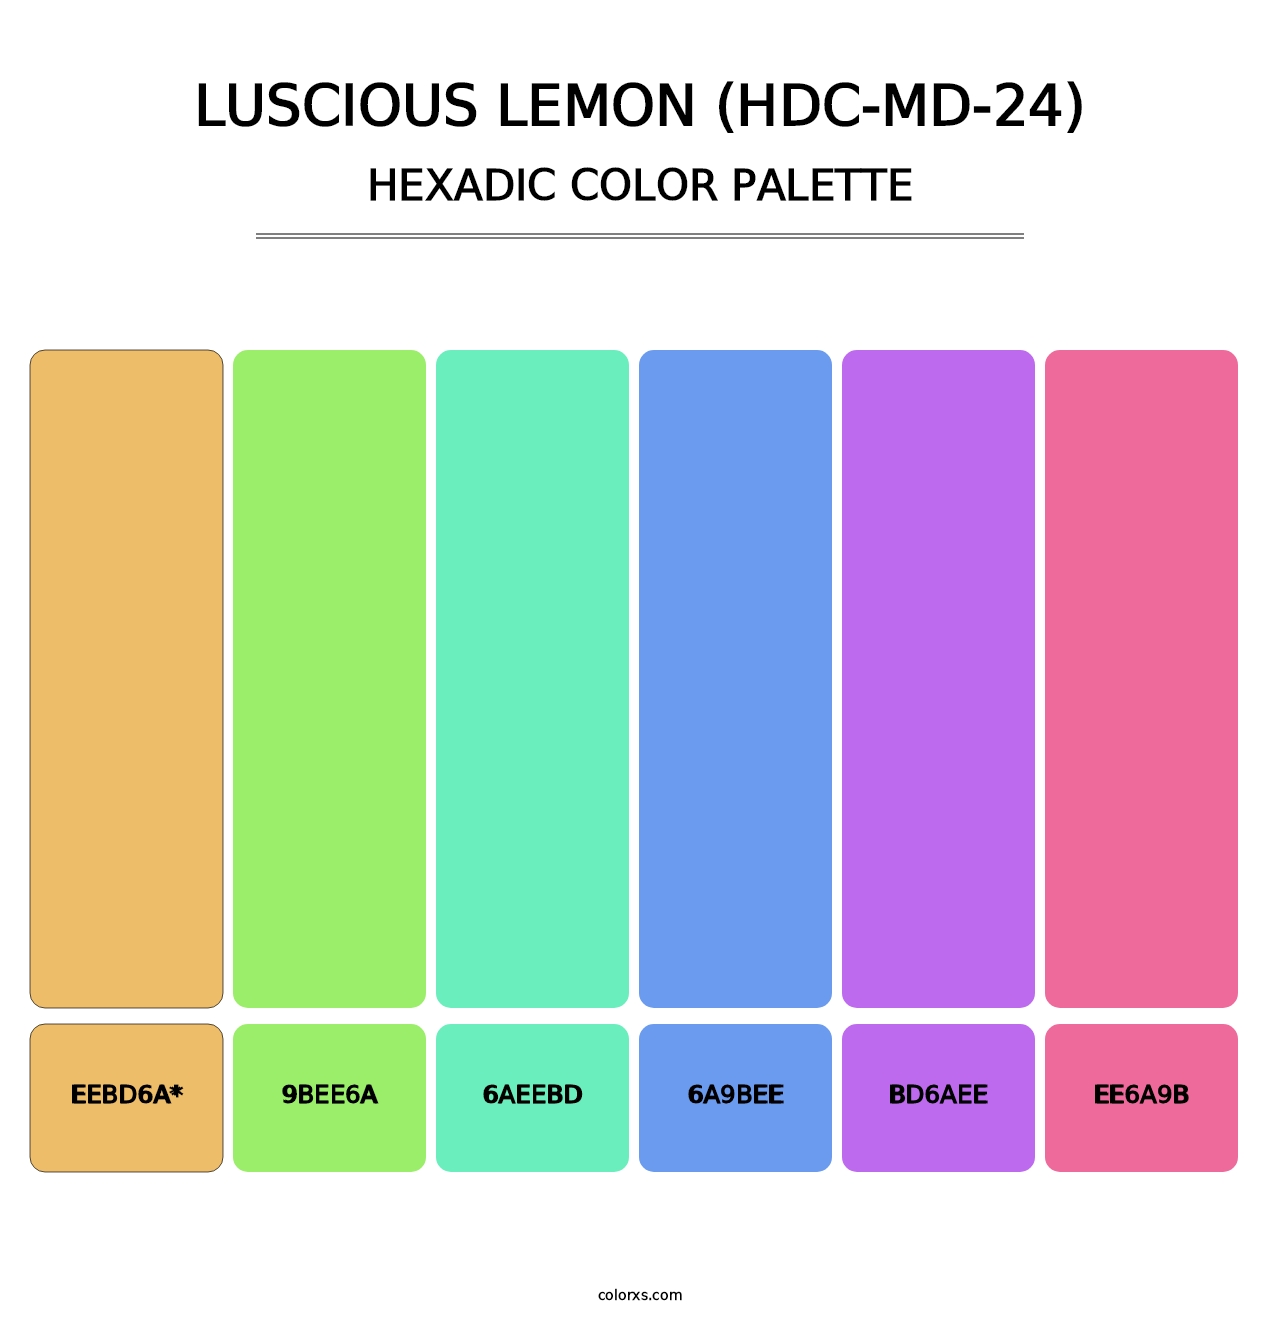 Luscious Lemon (HDC-MD-24) - Hexadic Color Palette